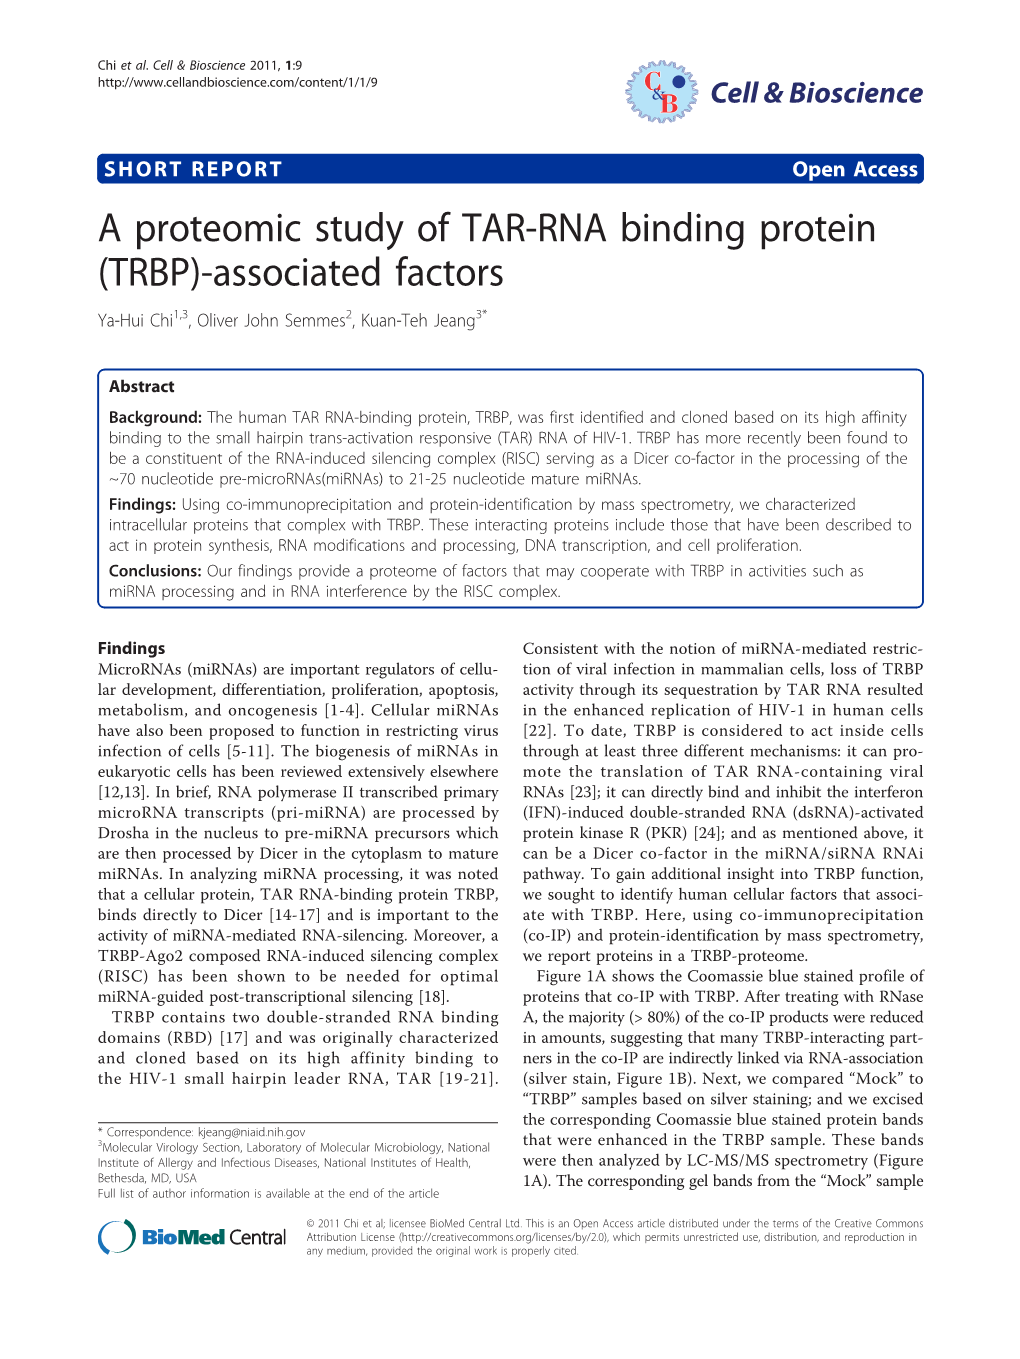 A Proteomic Study of TAR-RNA Binding Protein (TRBP)-Associated Factors Ya-Hui Chi1,3, Oliver John Semmes2, Kuan-Teh Jeang3*